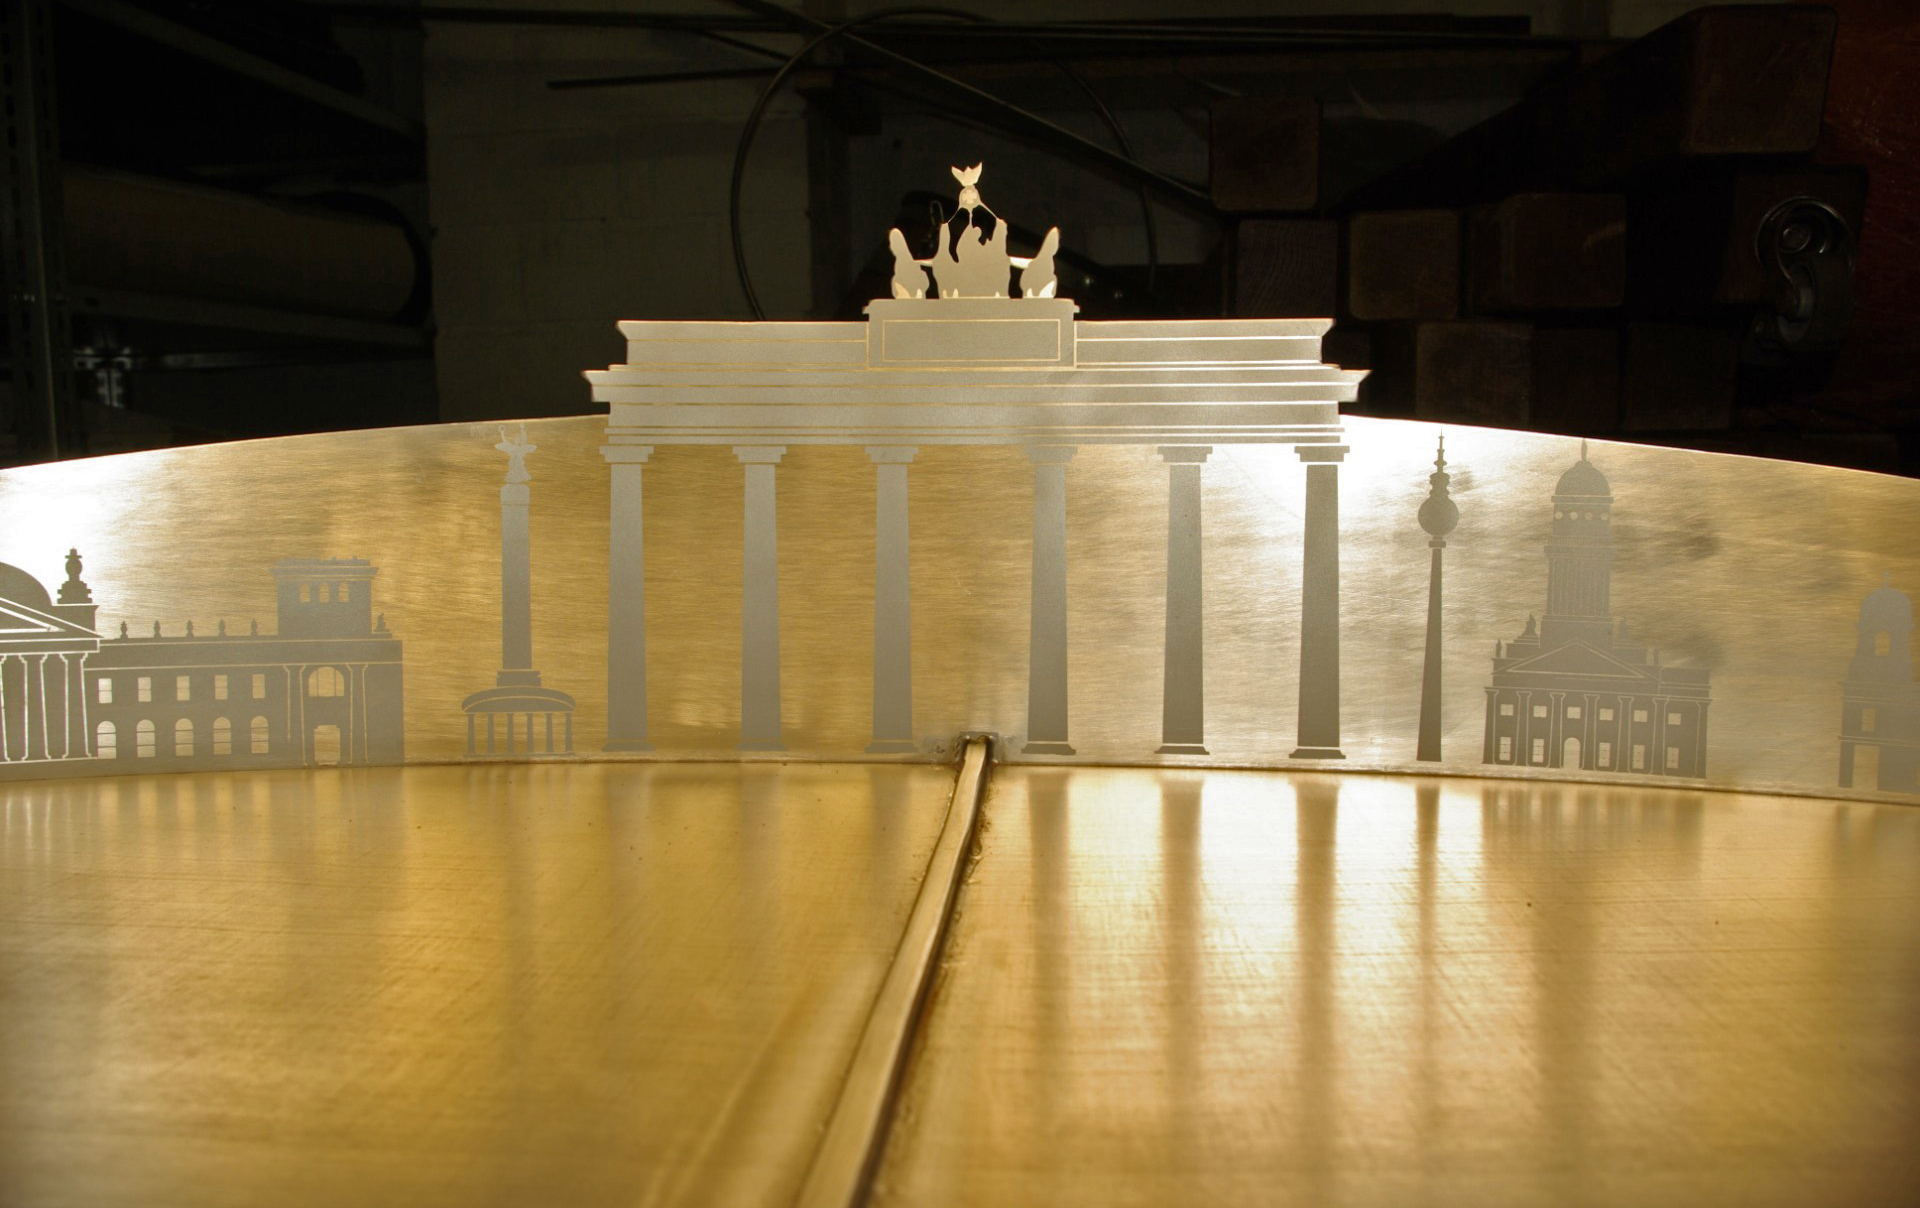 Formengrill mit Rückwand in Form des Brandenburgertors